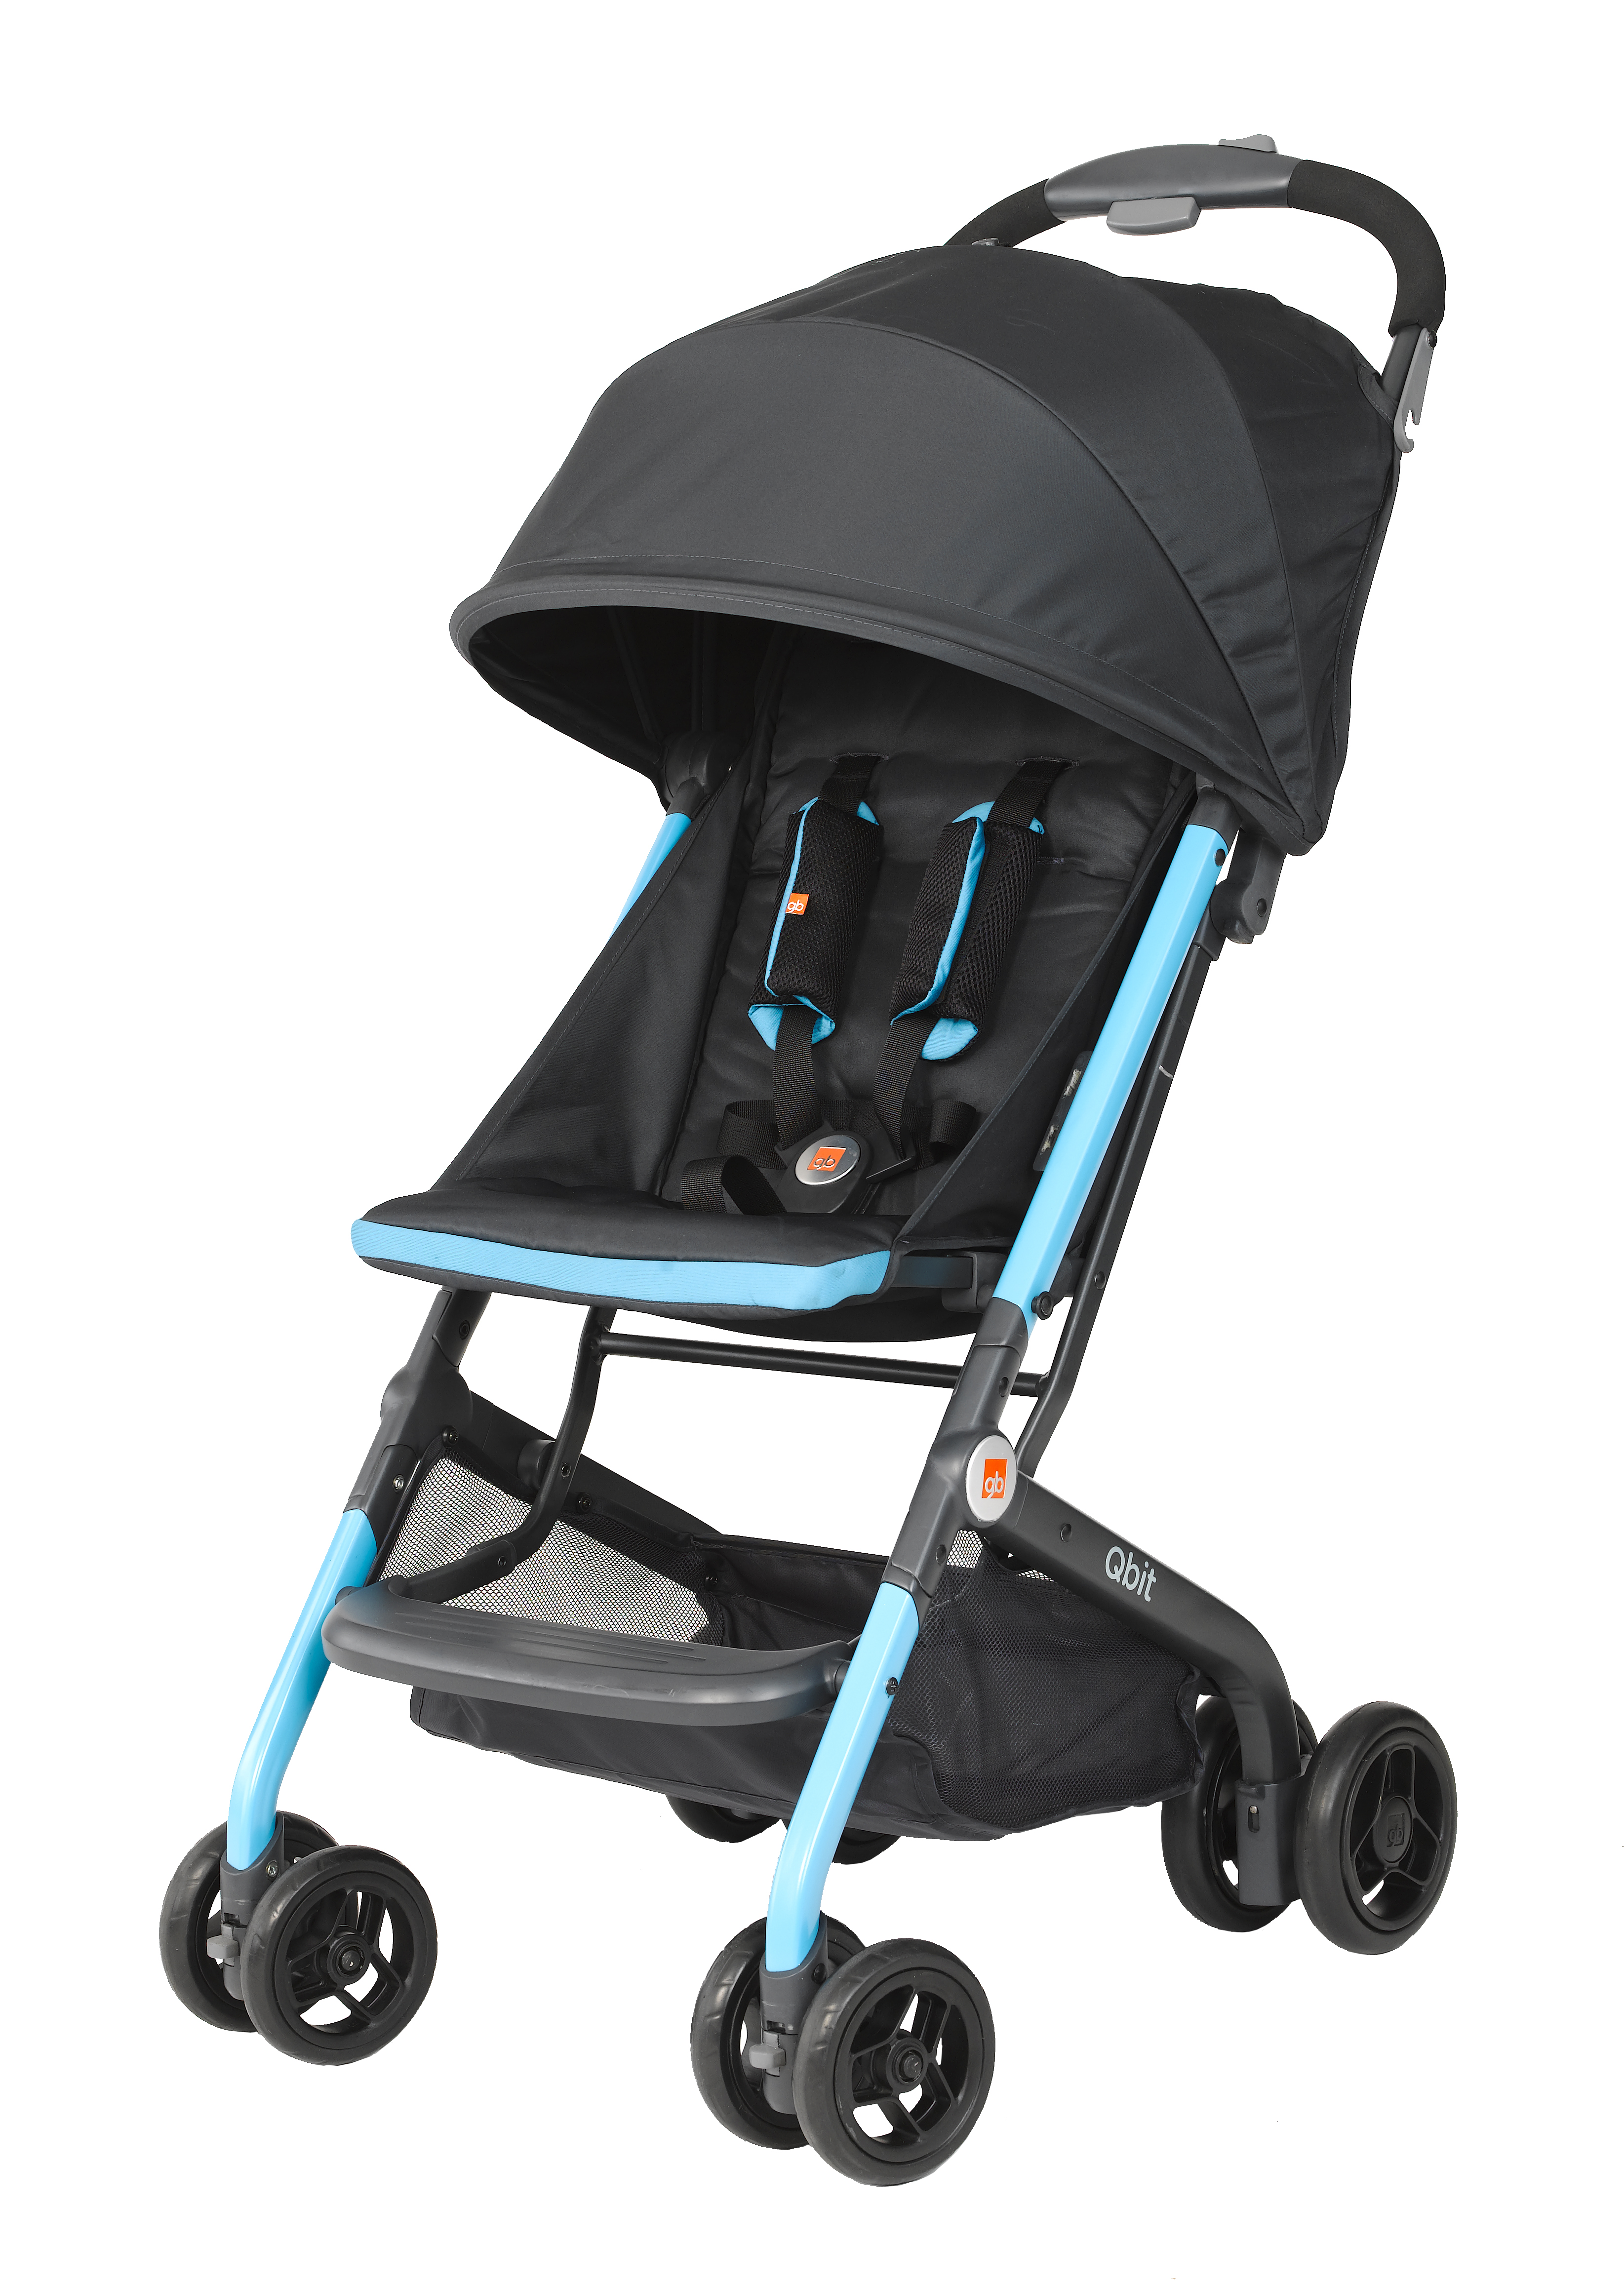 goodbaby stroller website